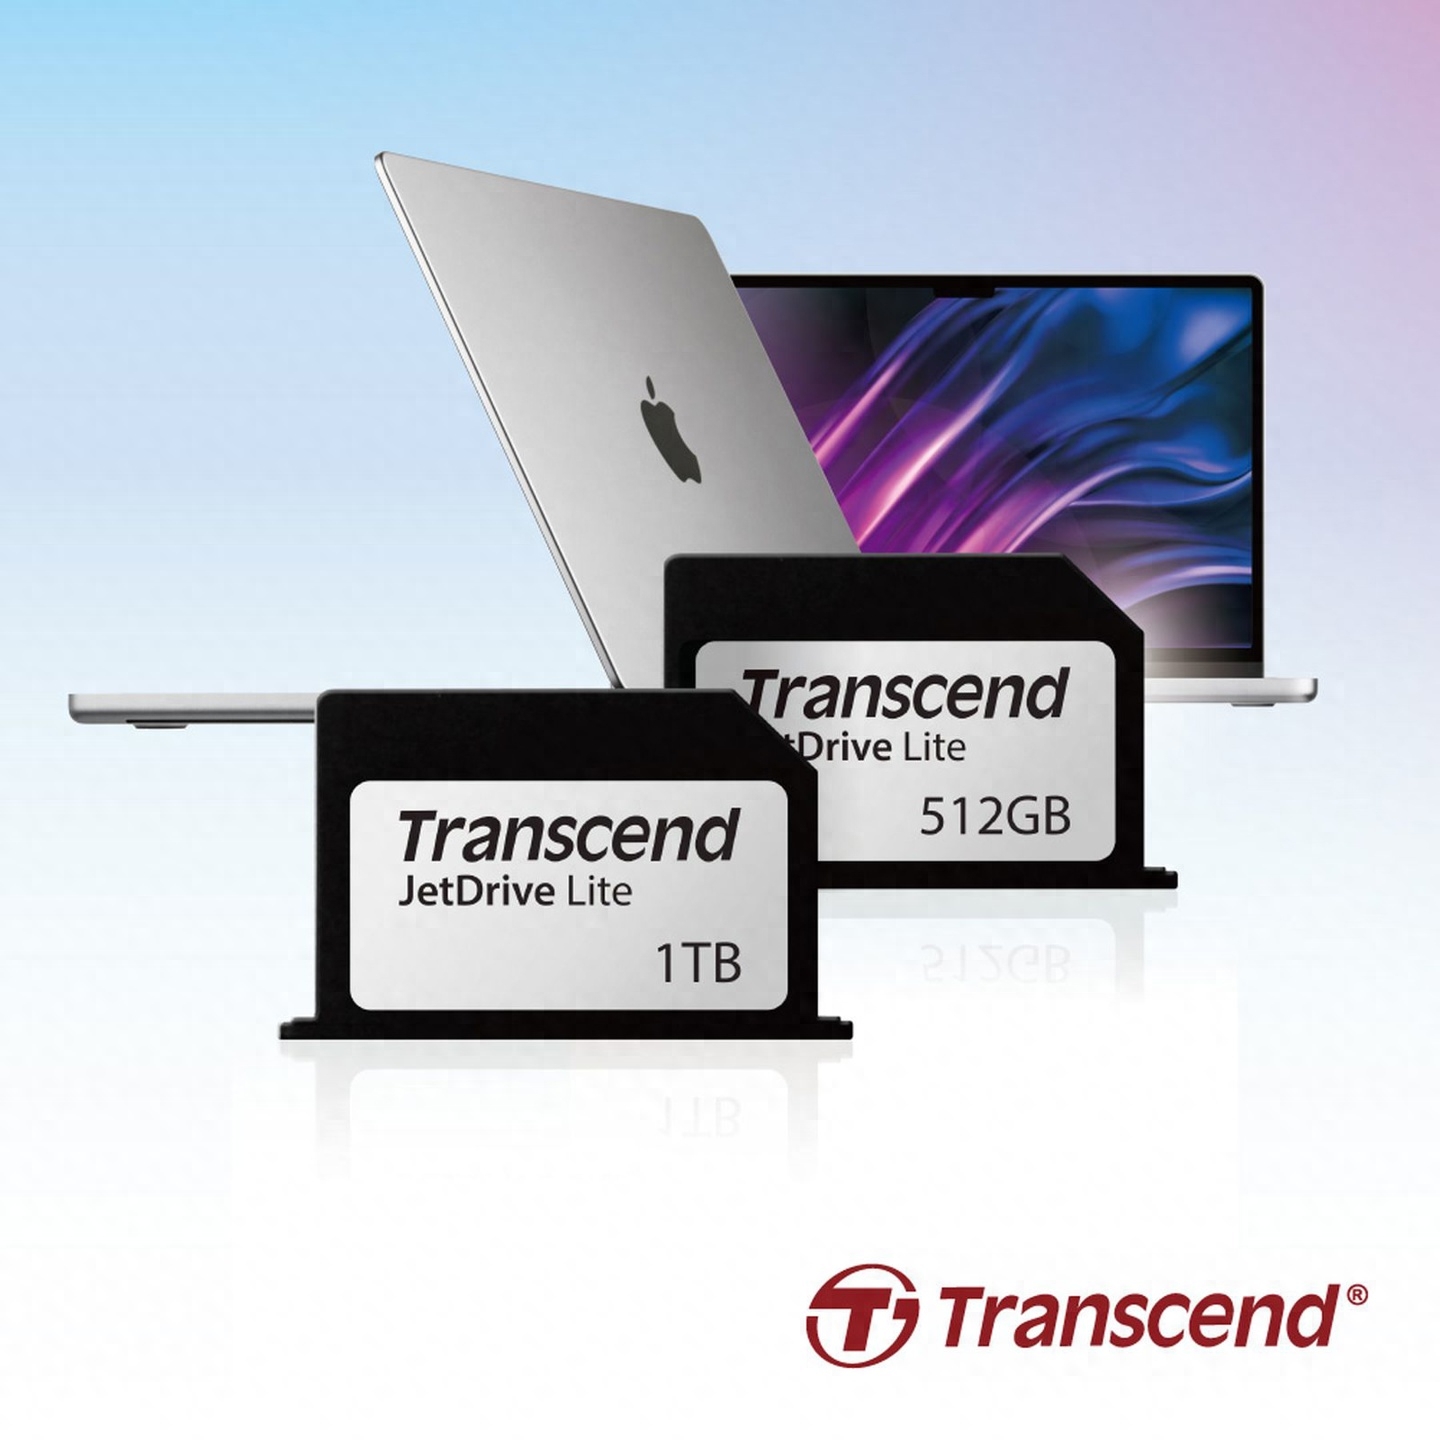 IT之家 4 月 21 日消息，今天，Transcend 宣布推出最高 1TB 的 JetDrive Lite 330 扩展卡，适用于 14 英寸和 16 英寸 MacBook Pro 机型。IT之家了解到，Transcend JetDrive Lite 330 扩展卡采用 NAND 闪存打造，